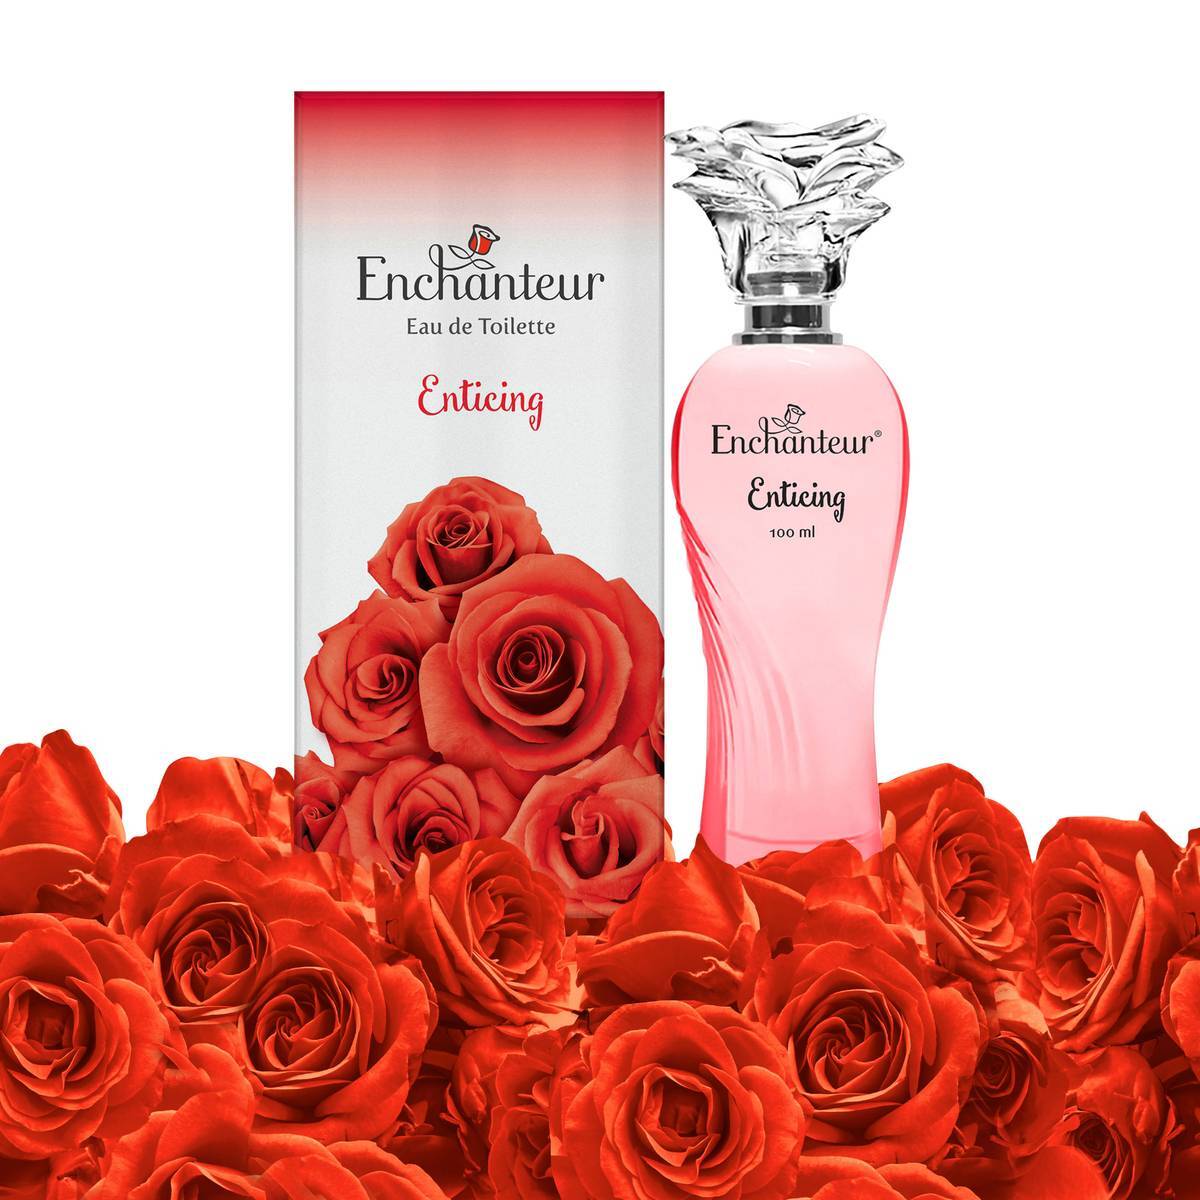 Enchanteur Enticing EDT Perfume for Women 100 ml